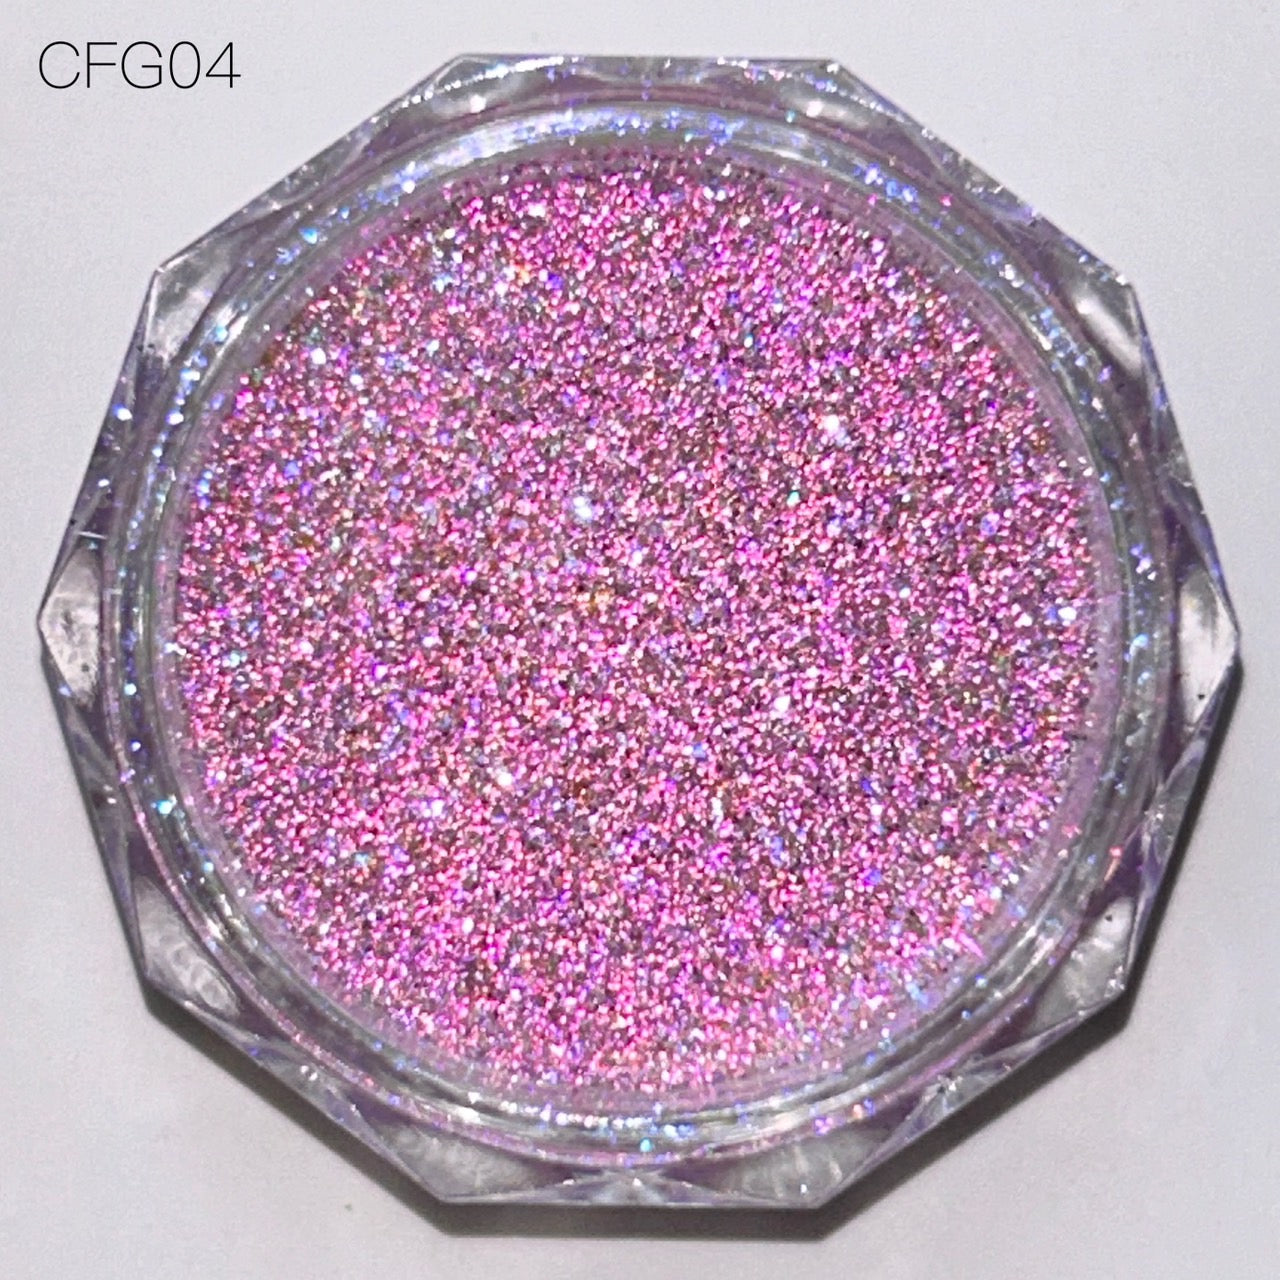 ageha Candy Flash Glitter [CFG4]